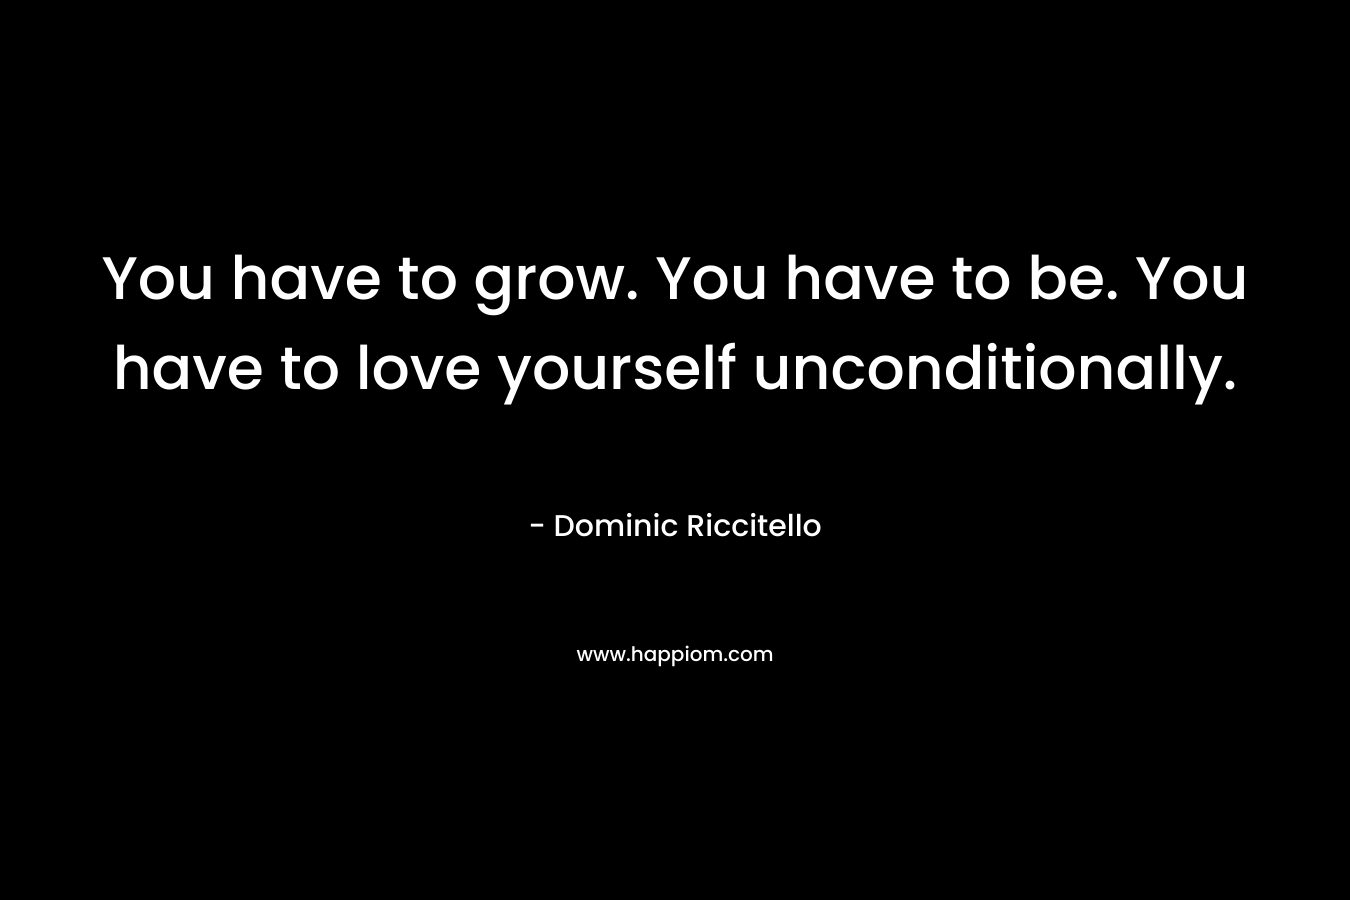 You have to grow. You have to be. You have to love yourself unconditionally.